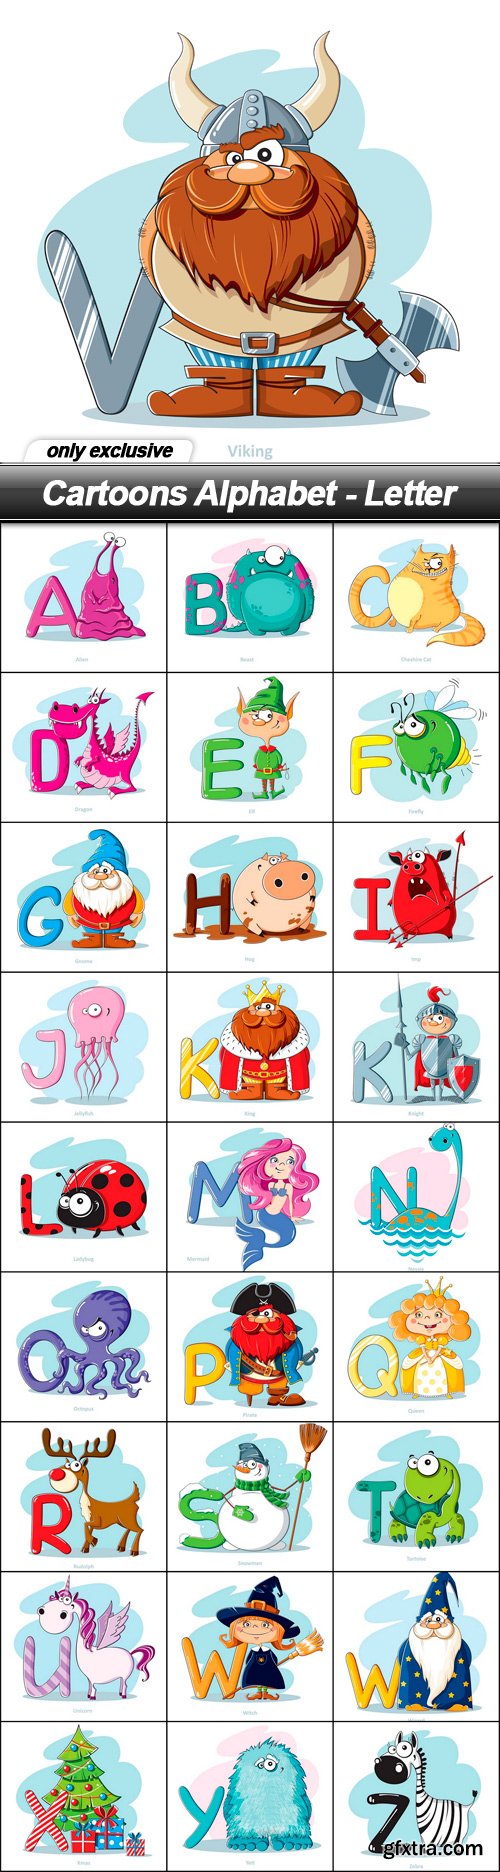 Cartoons Alphabet - Letter - 28 EPS